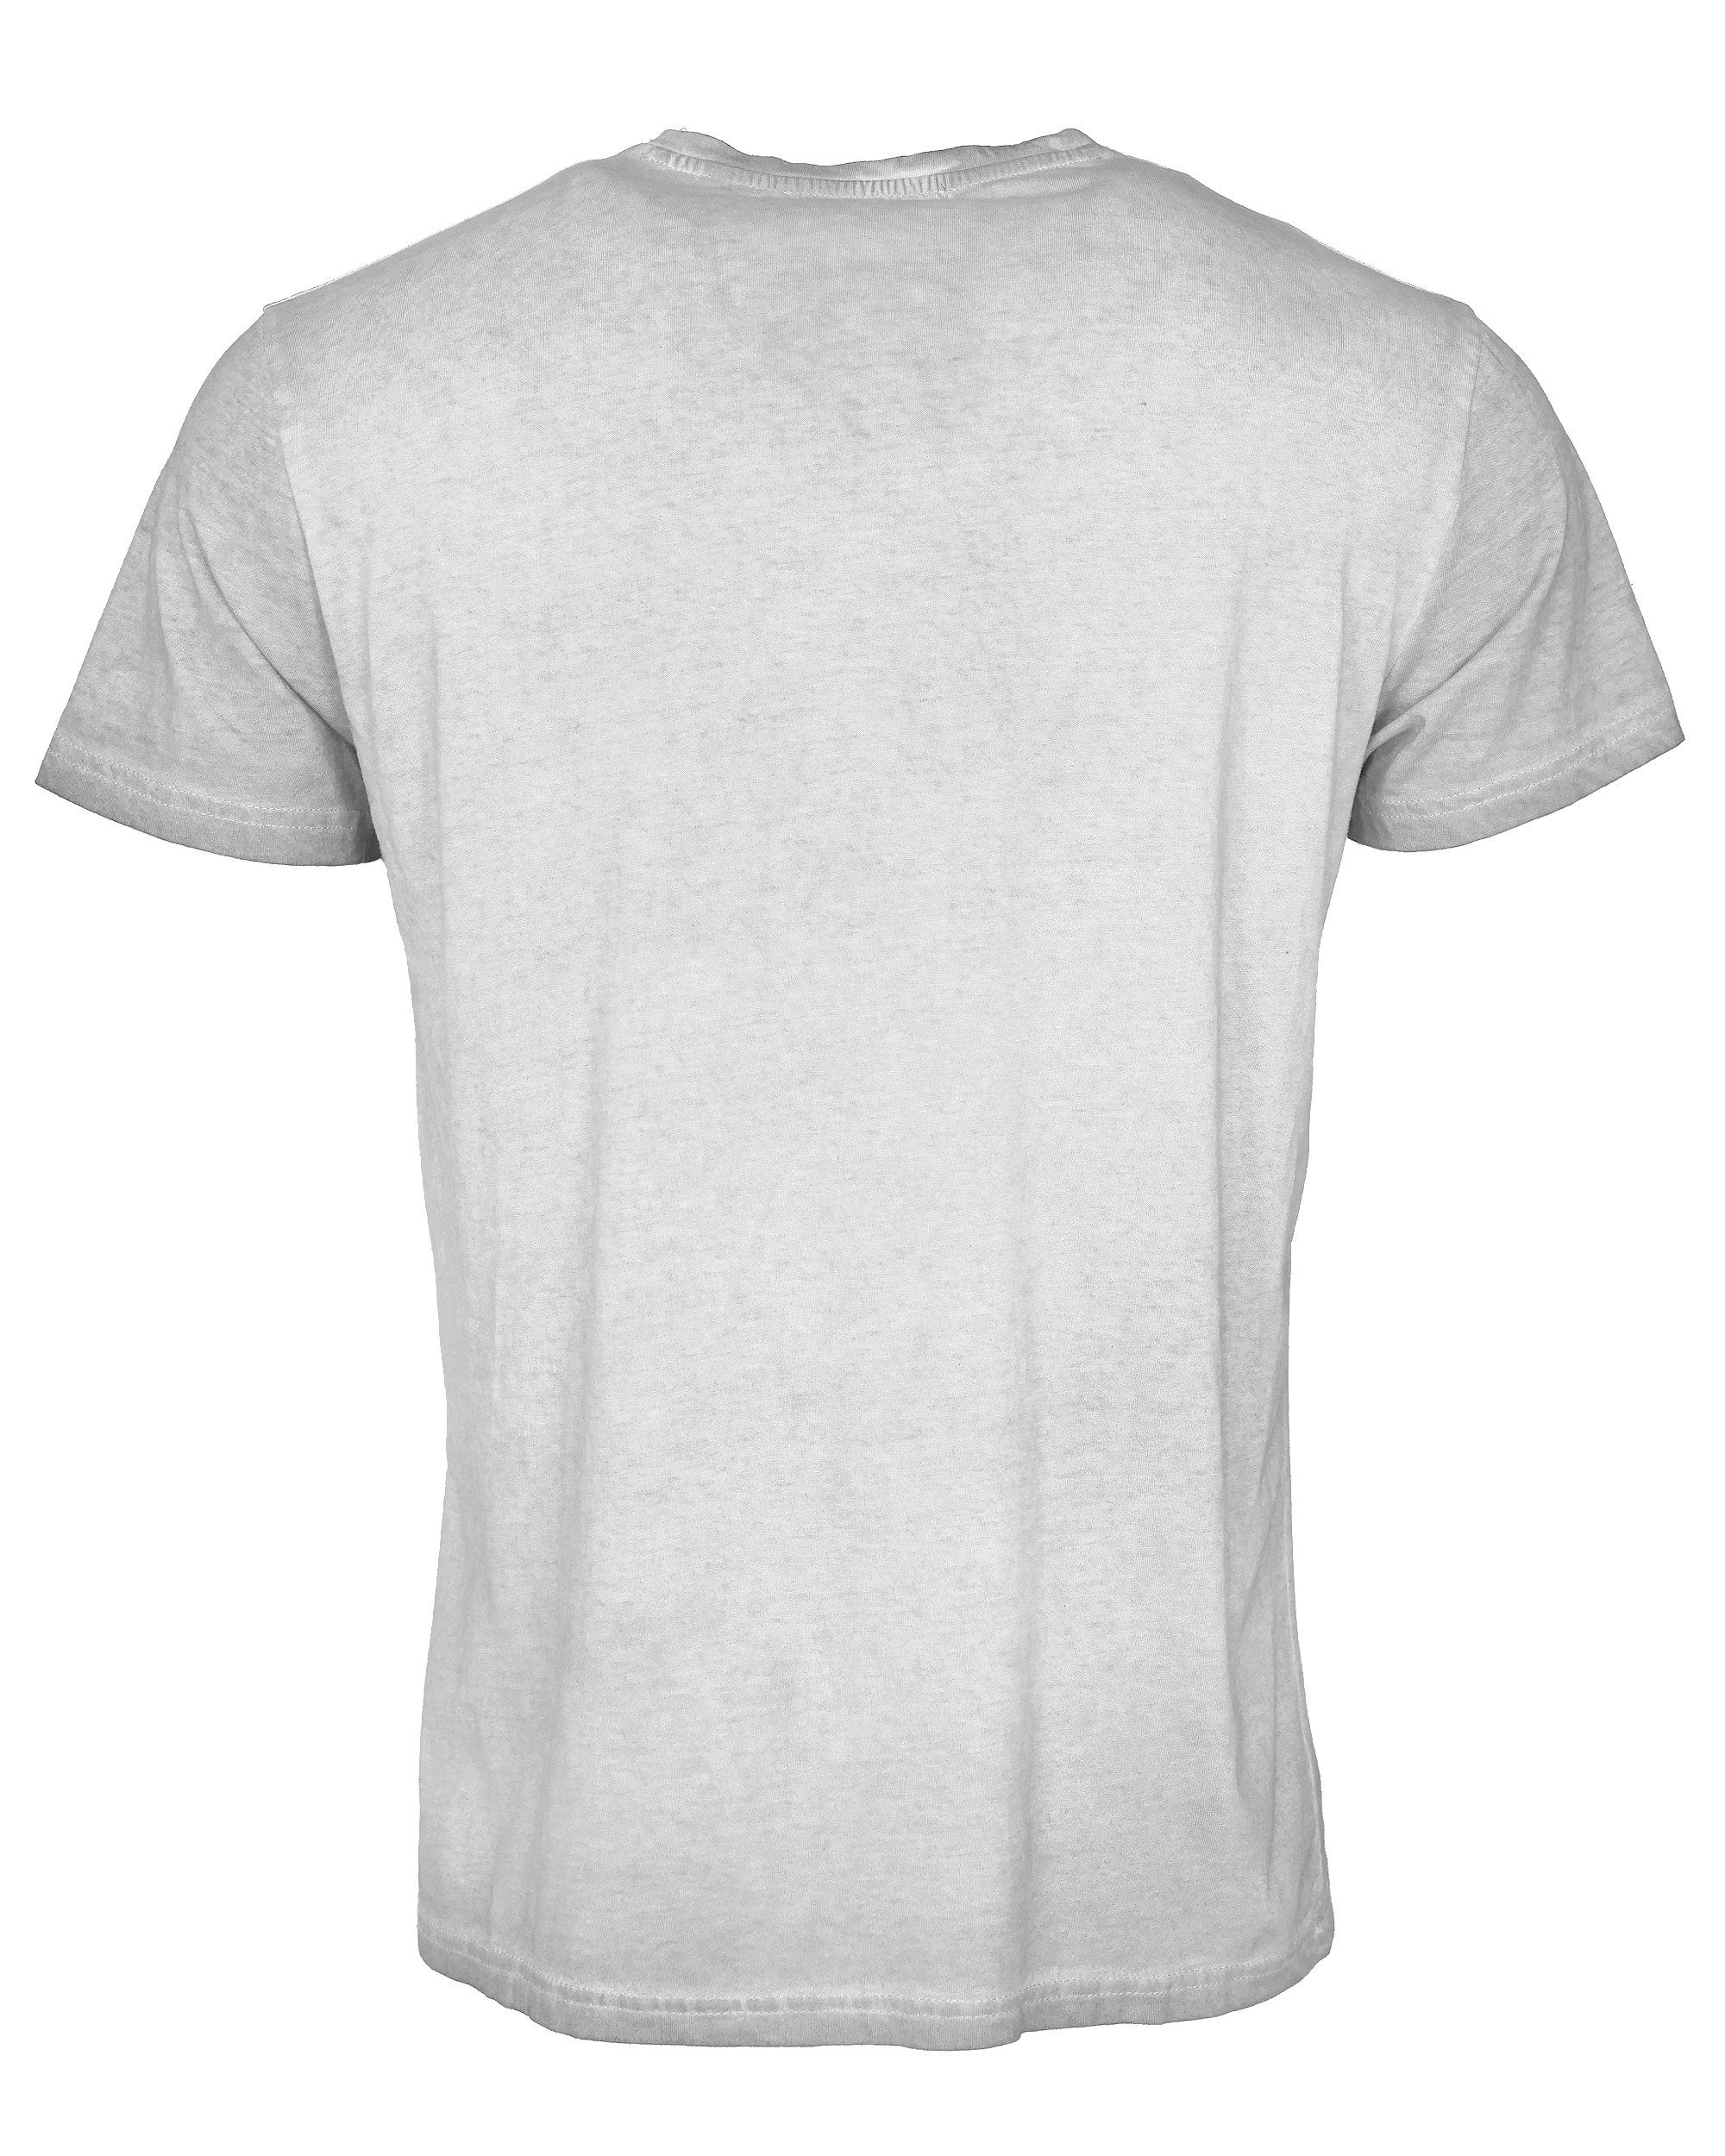 grey GUN TOP light TG20212105 T-Shirt